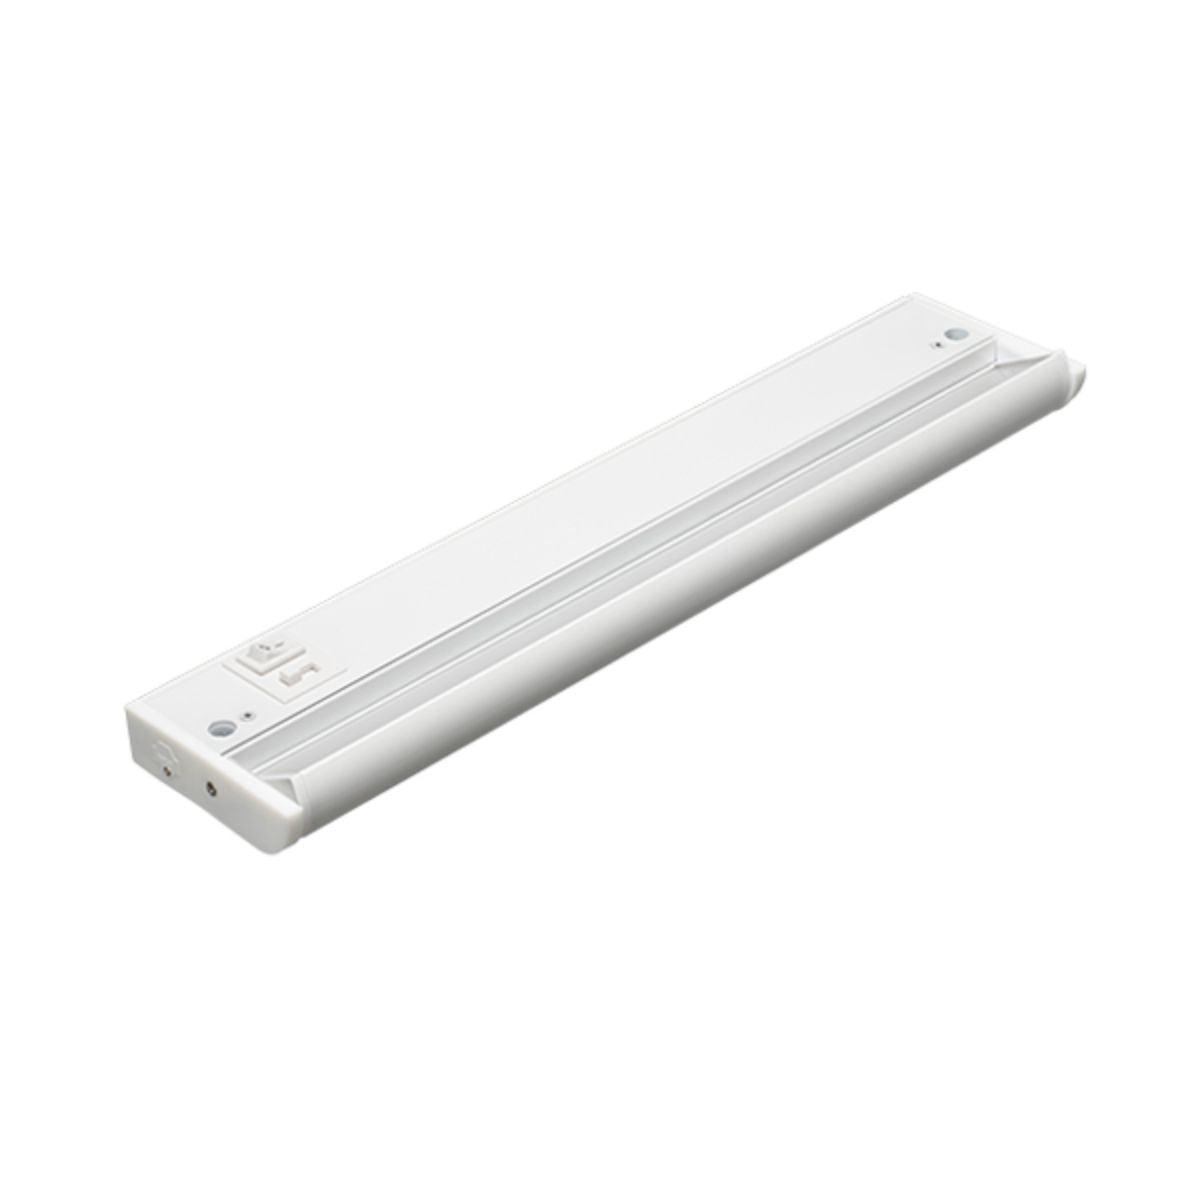 LED 5 Complete 16 Inch Swivel Under Cabinet LED Light, 620 Lumens, Linkable, Selectable CCT 2700K to 5000K, 120V